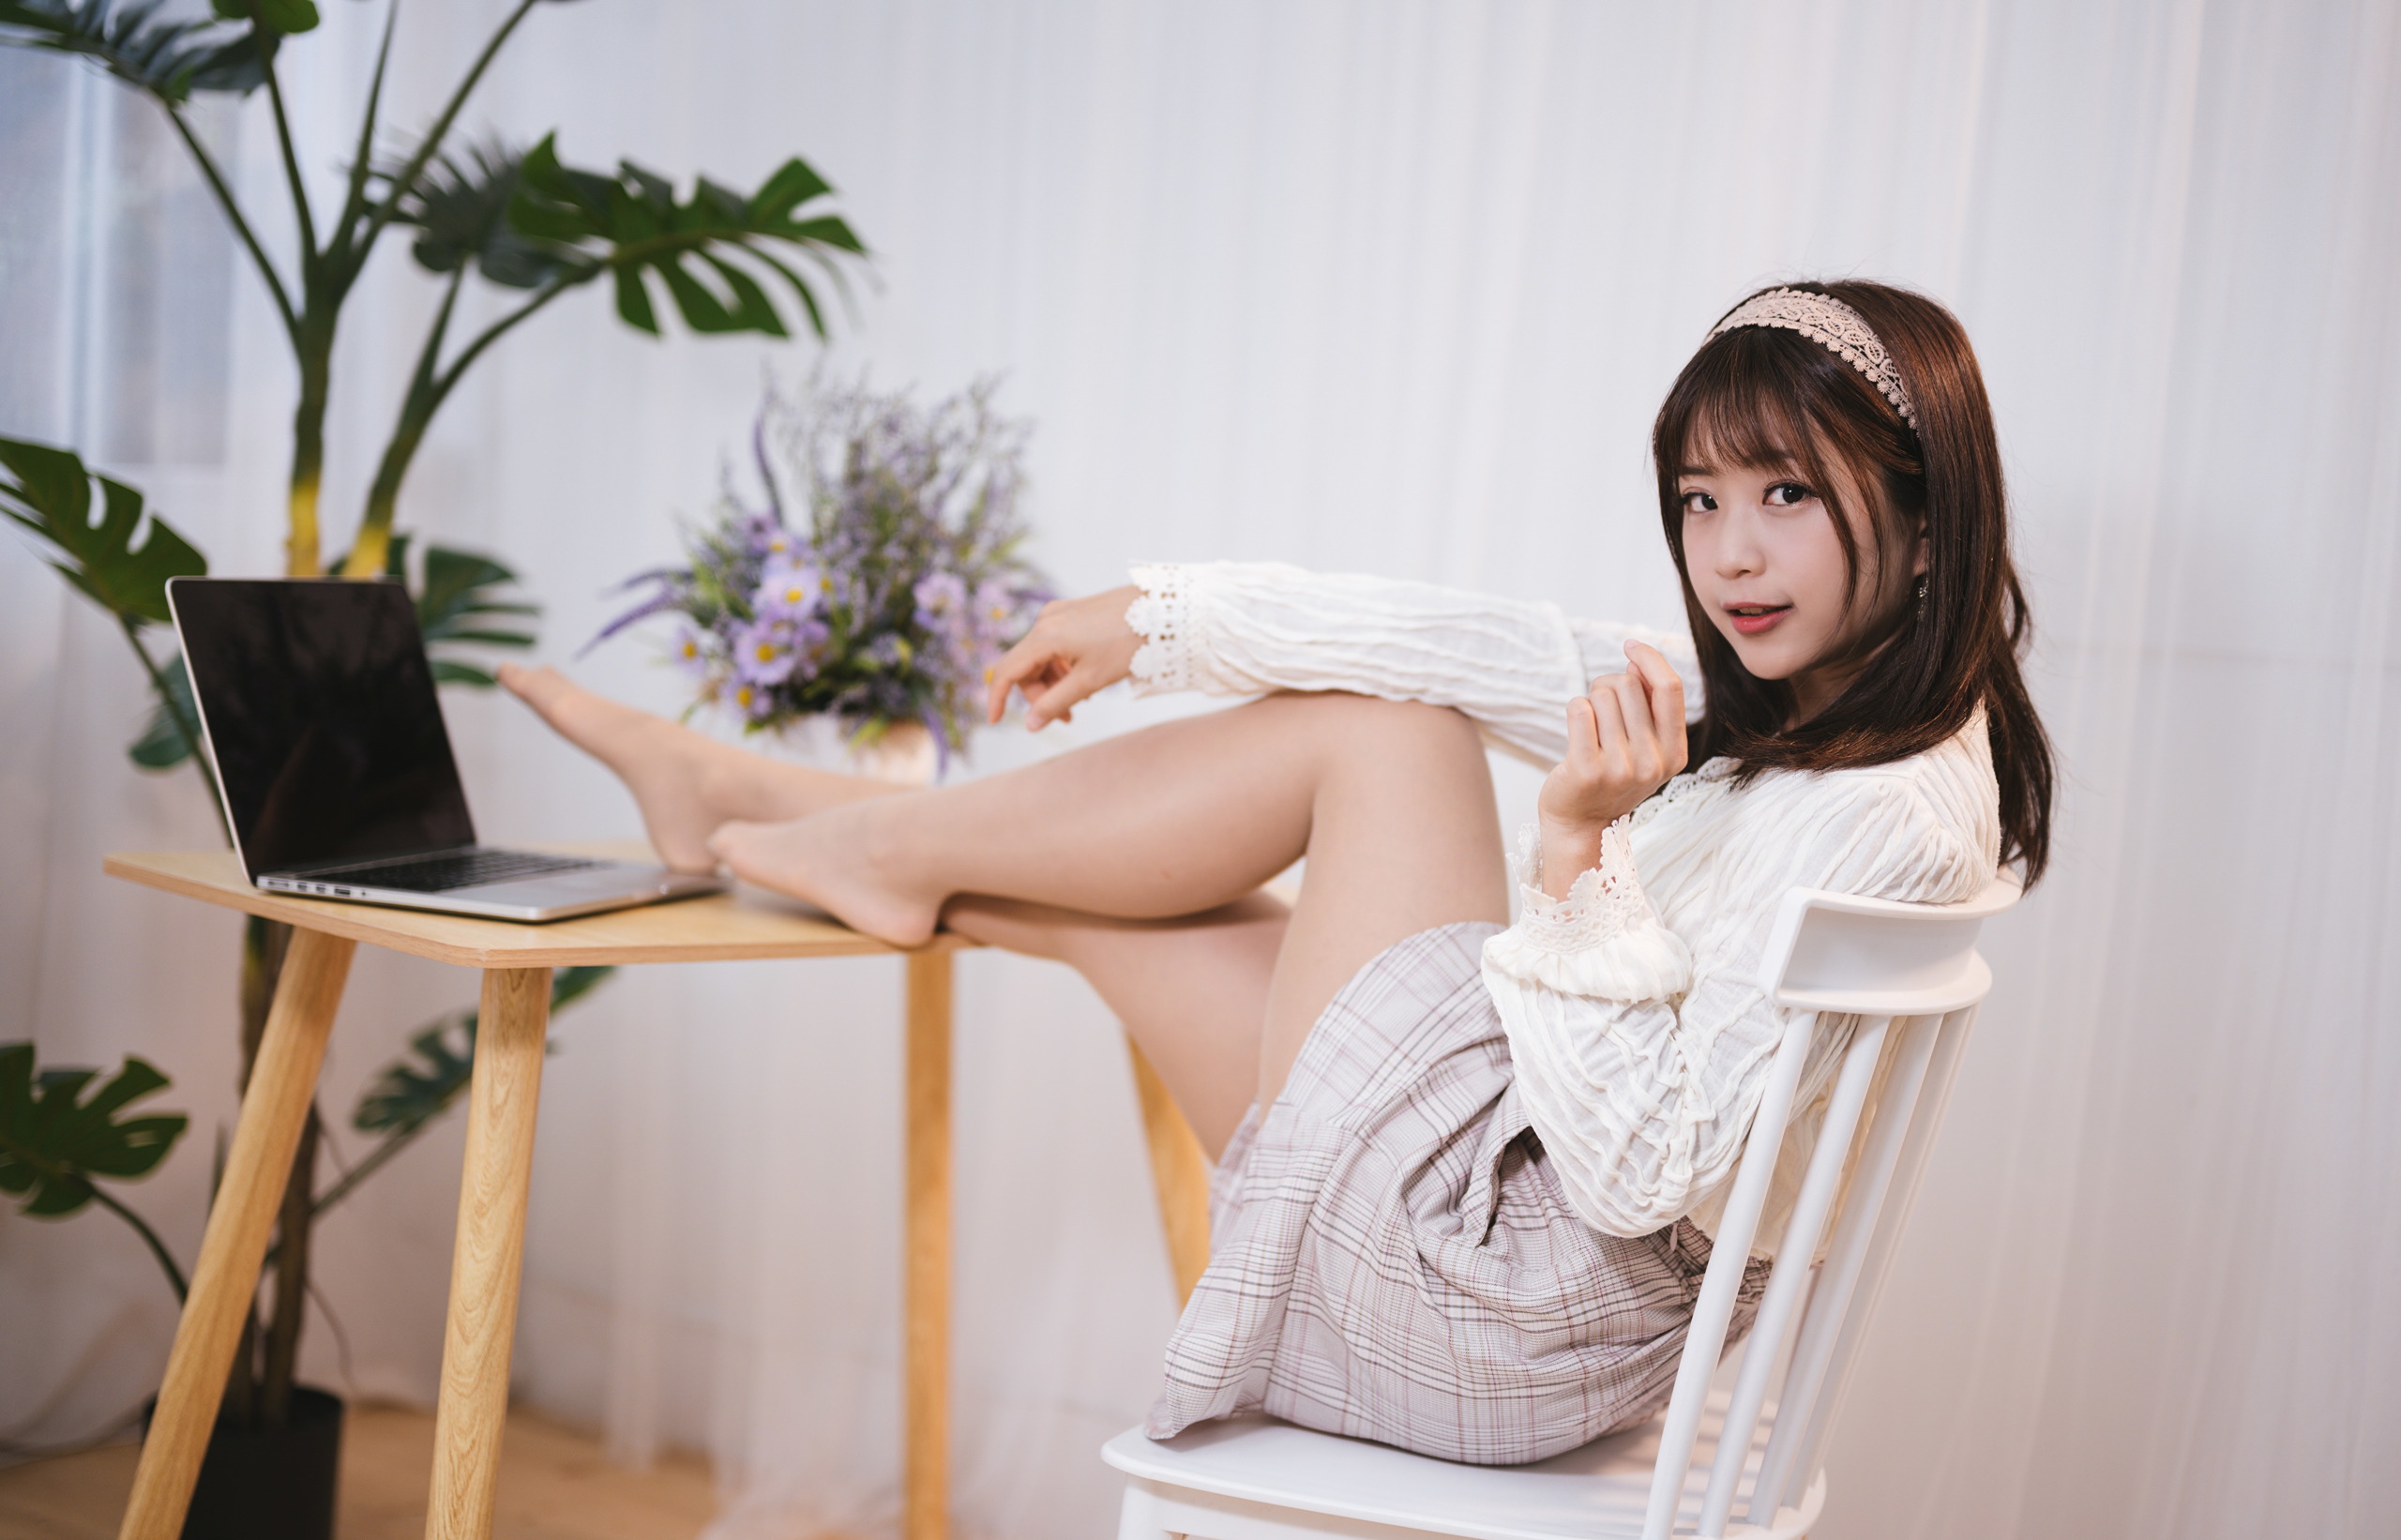 Asian Model Women Long Hair Dark Hair Sitting Jean Shorts Flowerpot Plants Table Chair Flowers Lapto 2560x1642